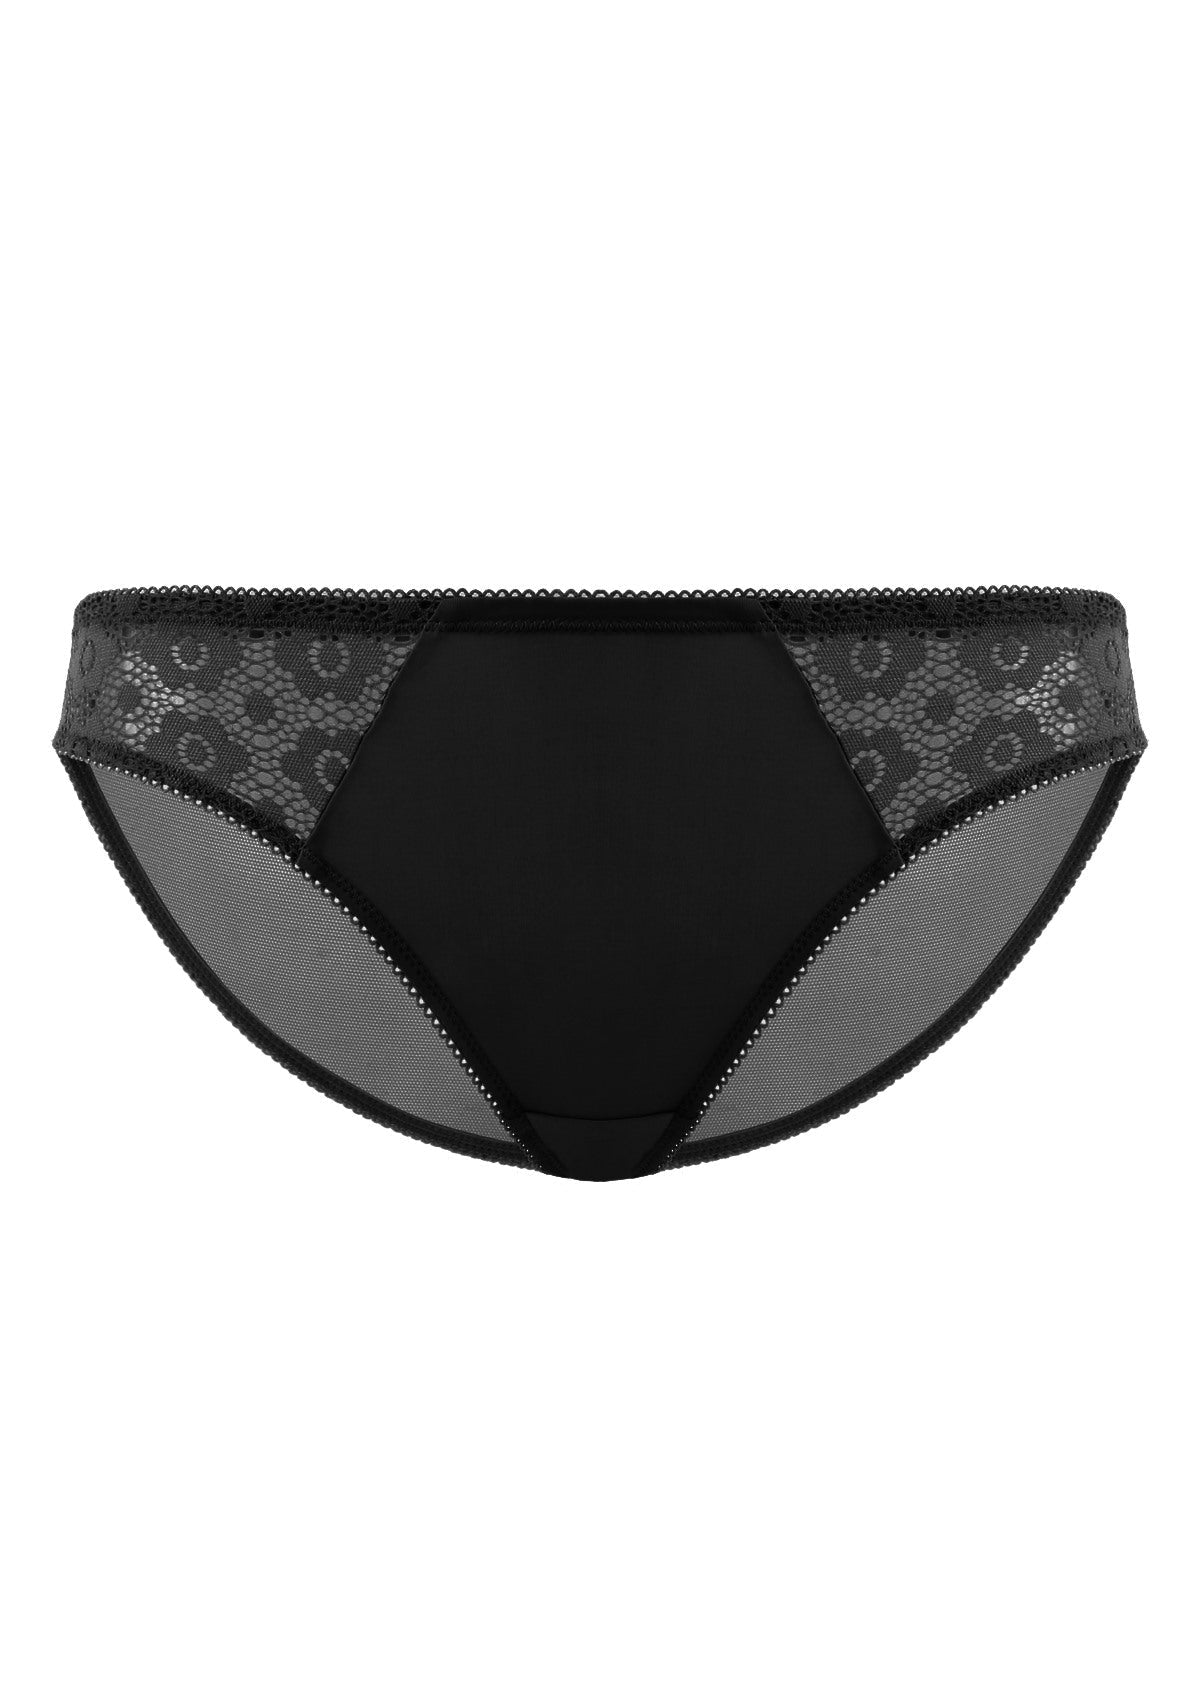 HSIA Serena Comfy Lace Trim Stylish Bikini Underwear - M / Black